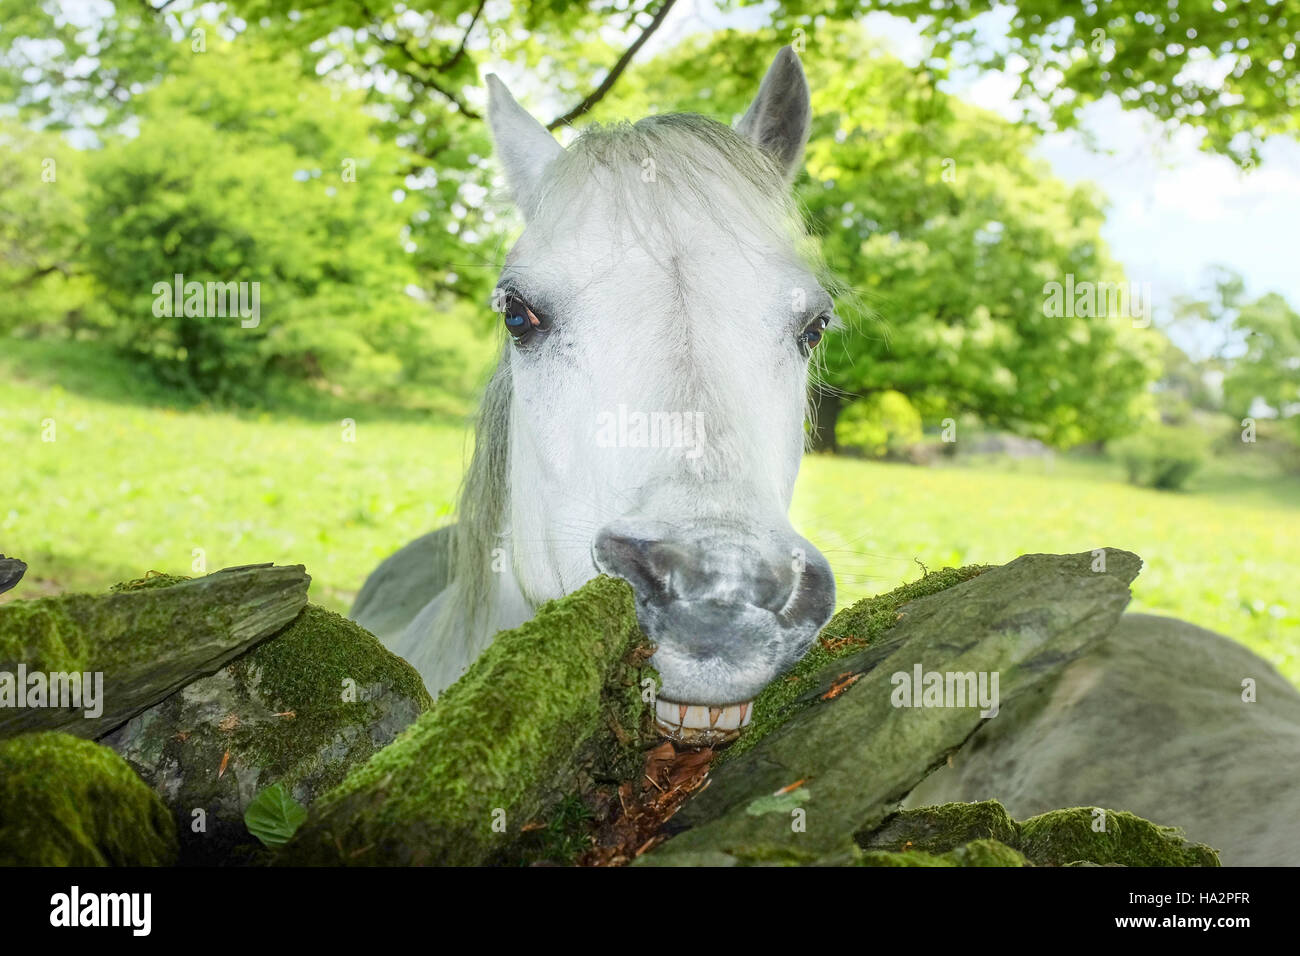 Smiling horse Stock Photo